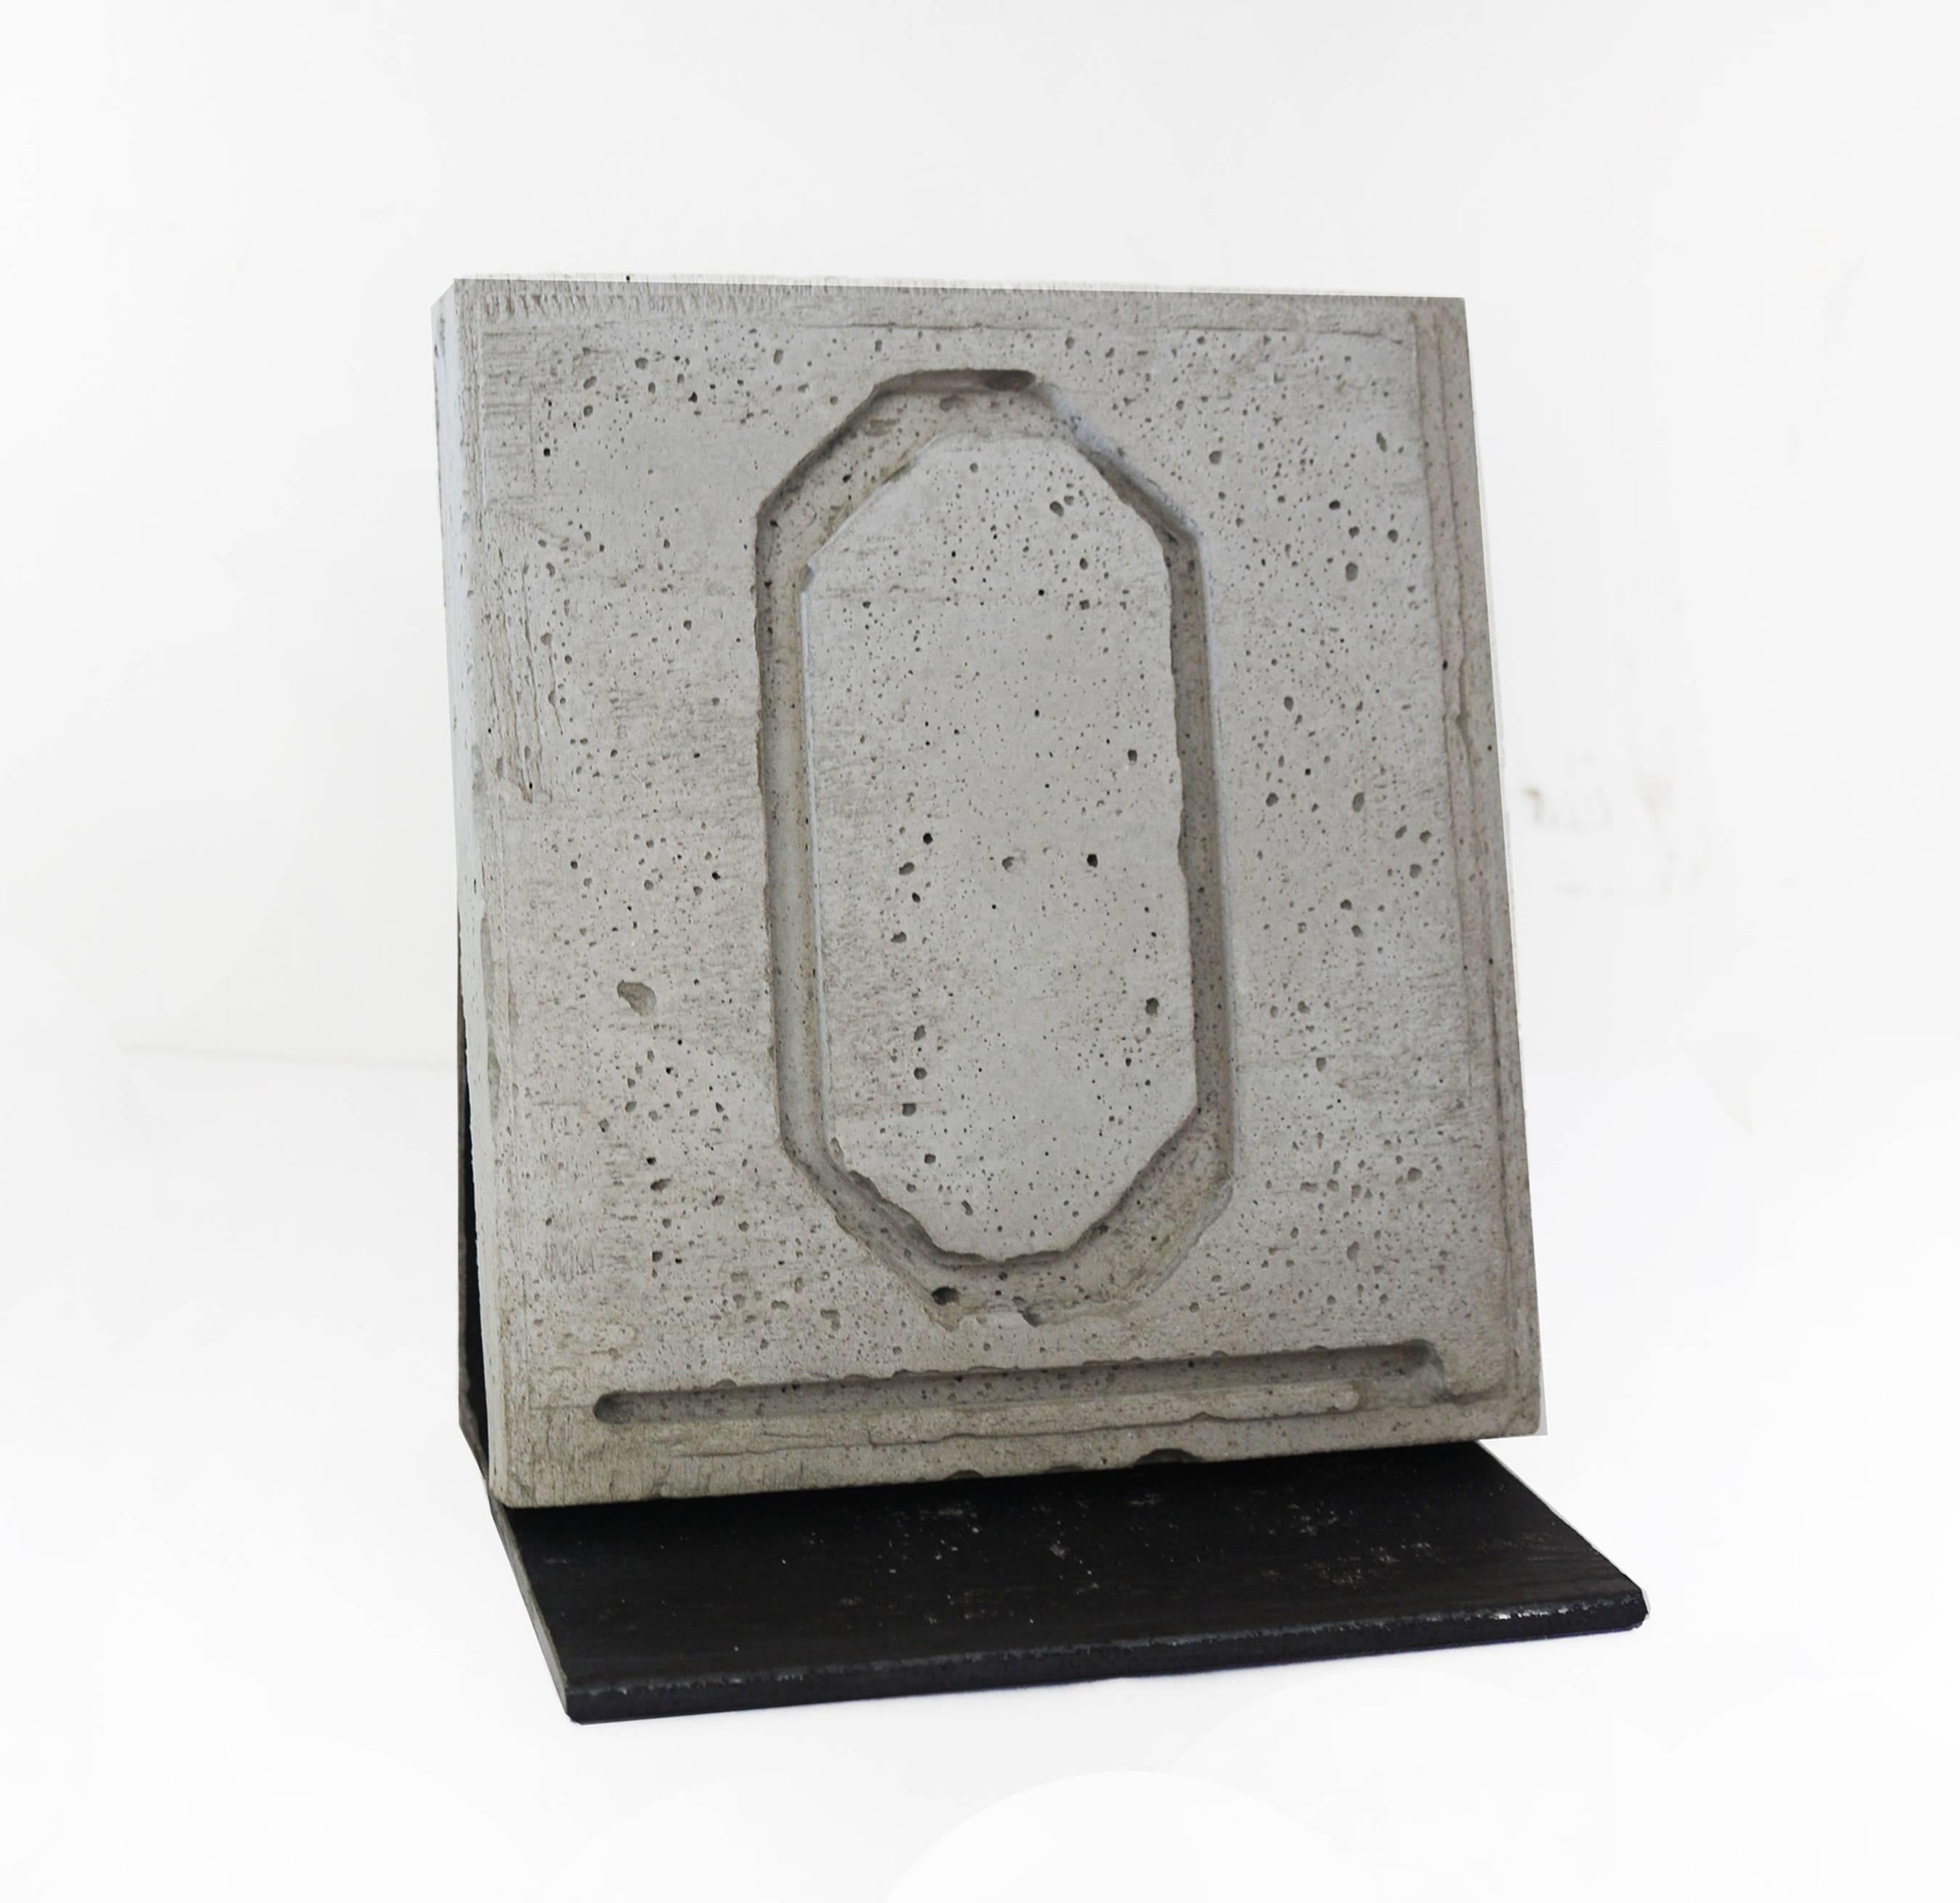 Chris Klapper and Patrick Gallagher  Abstract Sculpture - Klapper & Gallagher, The Golden Ratio f0, 2016, Steel, Concrete